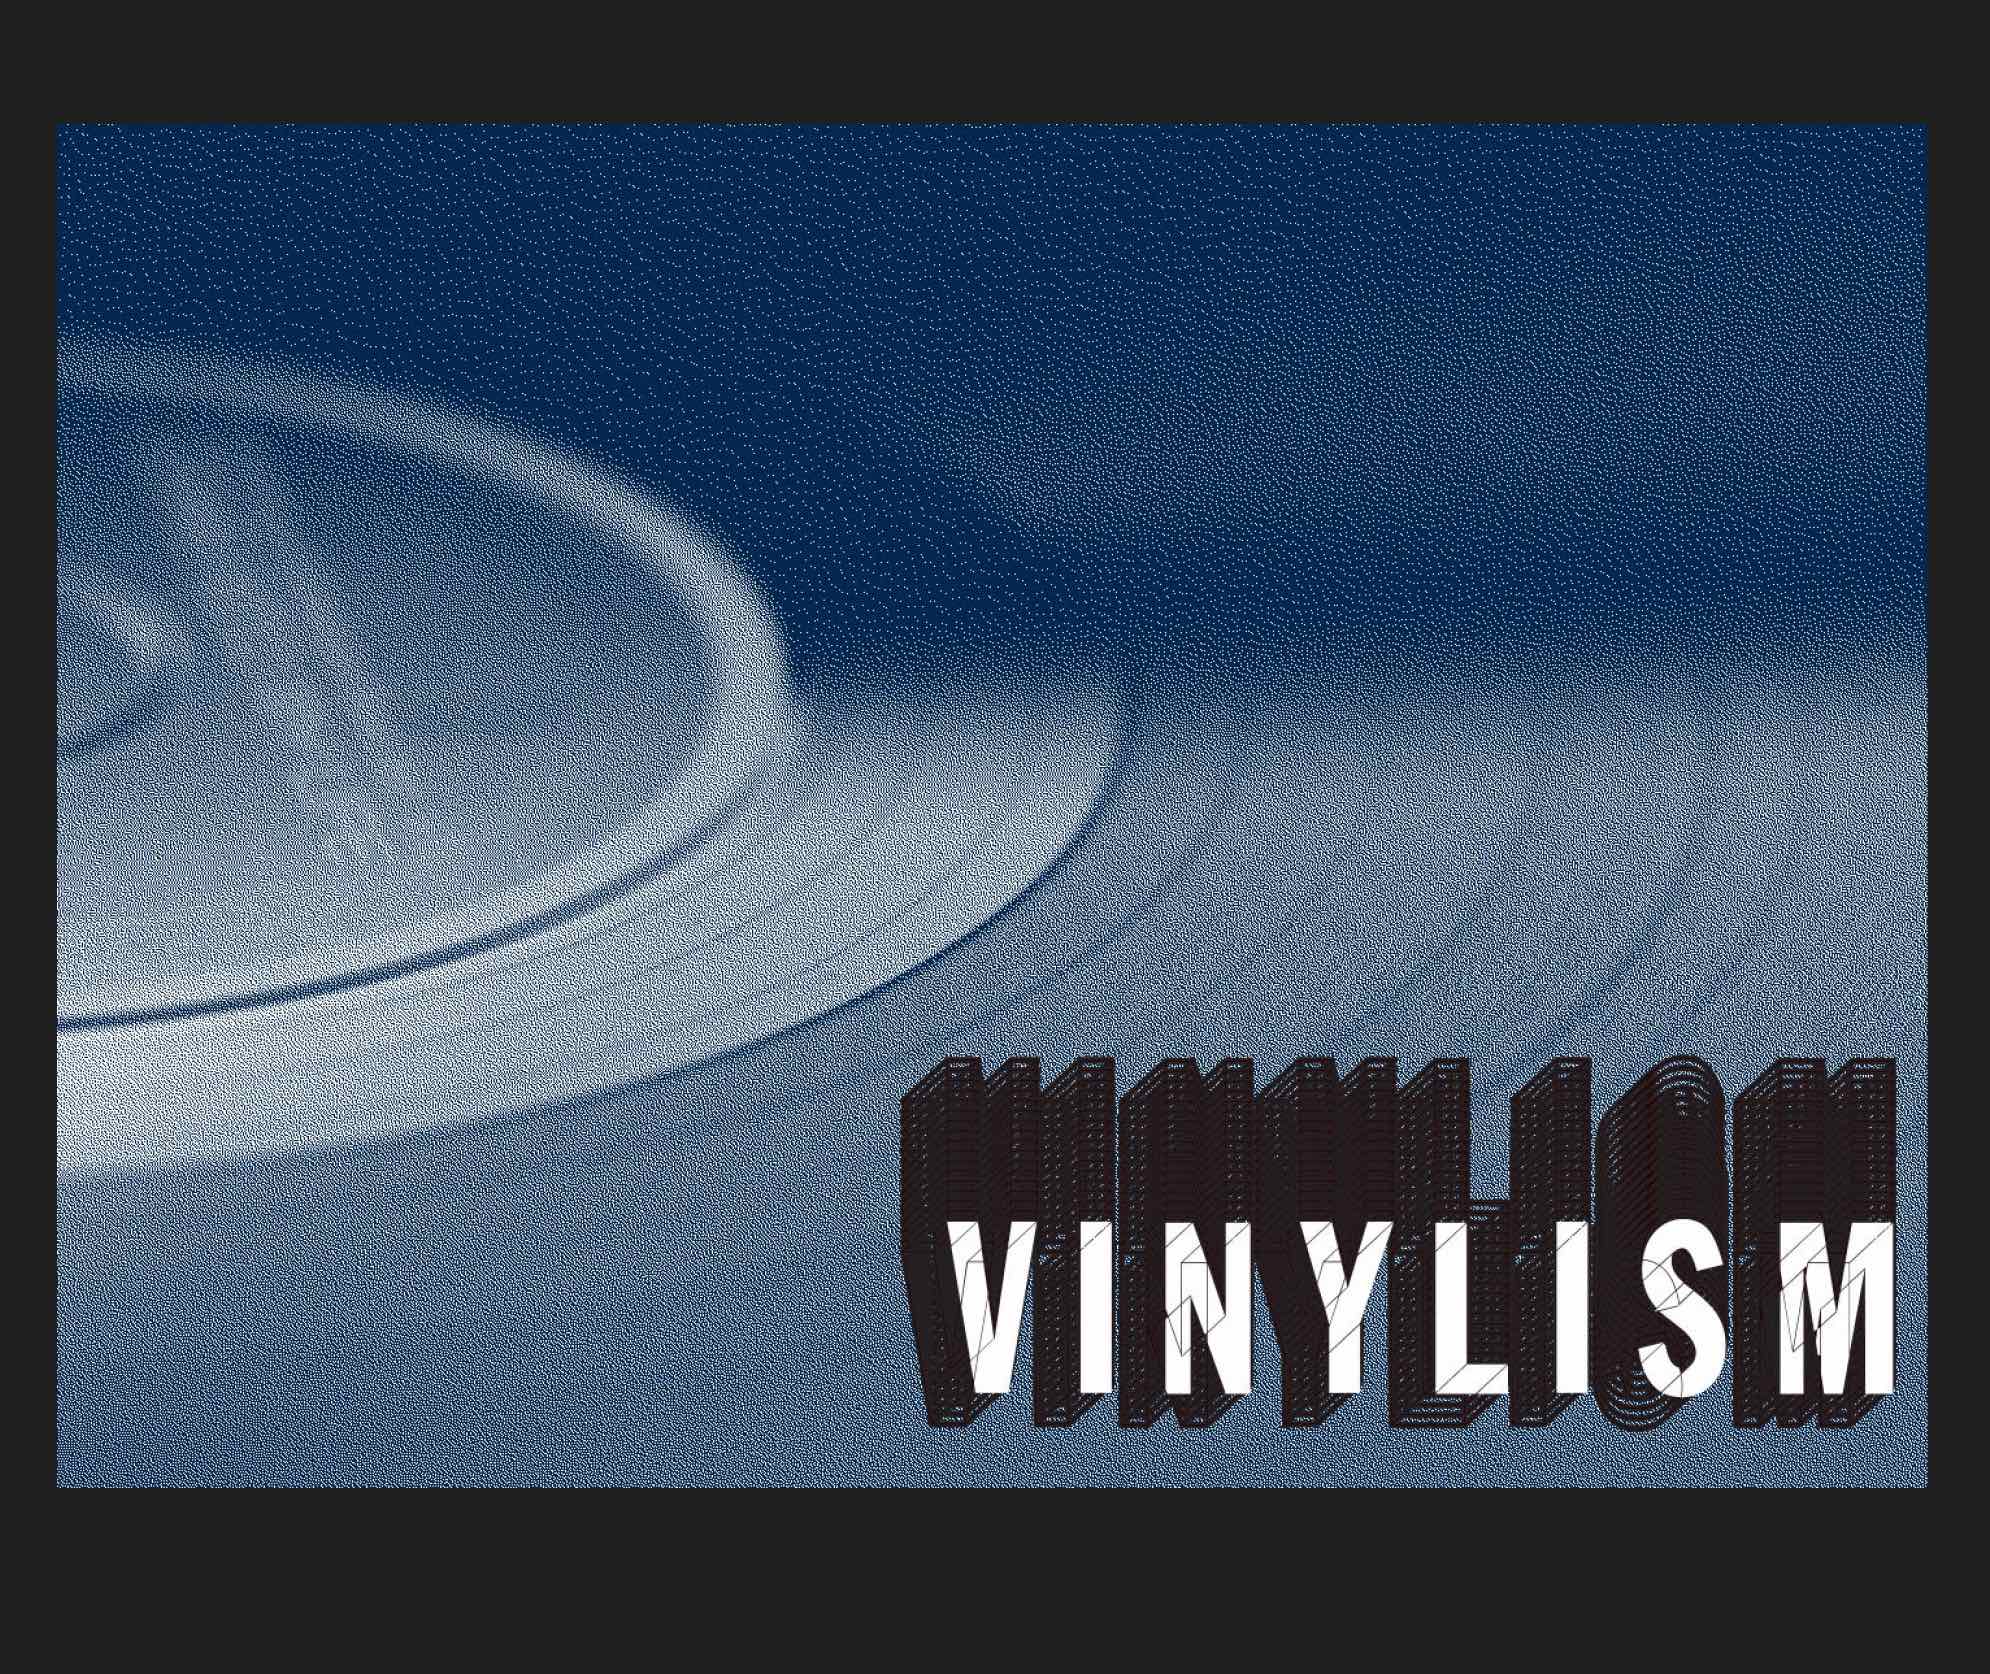 Vinylism